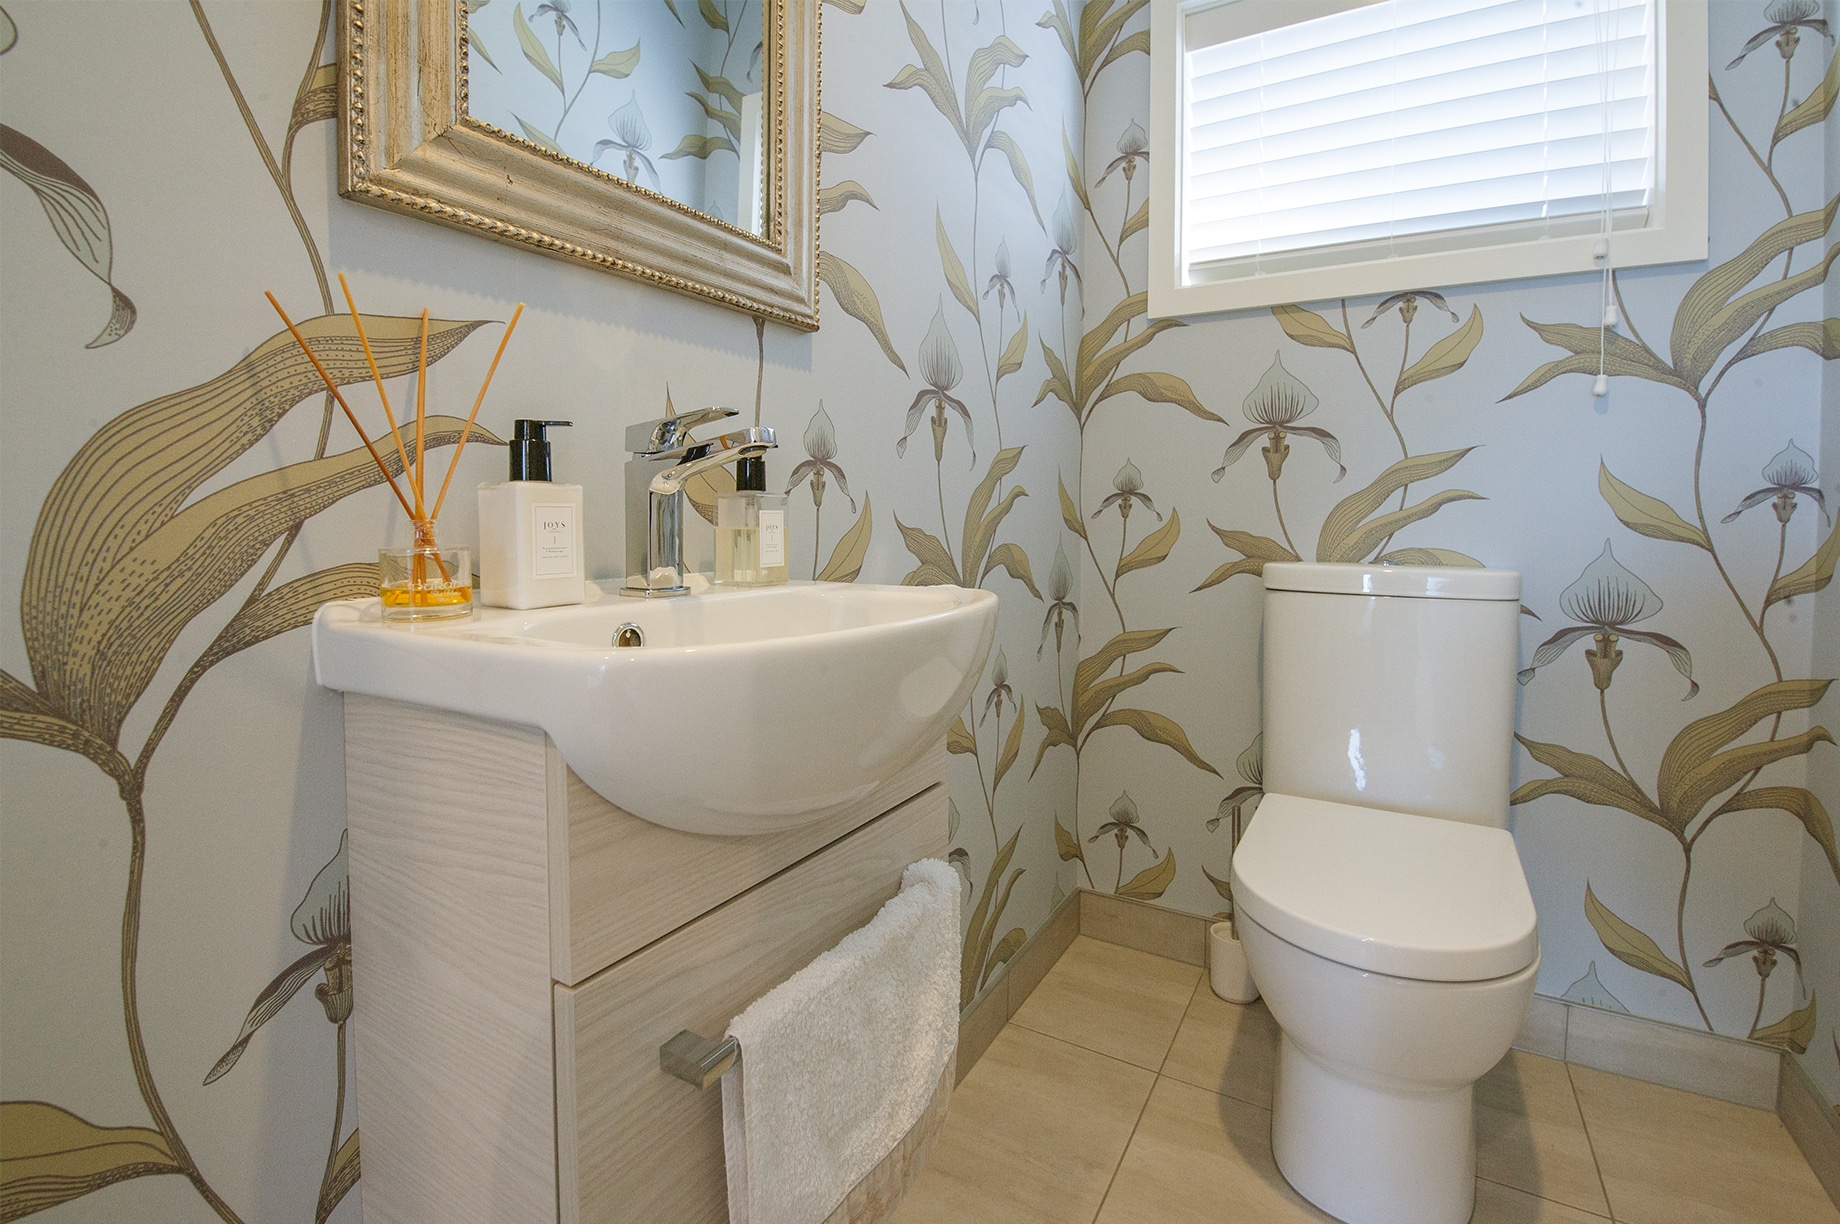 Bathroom interior with floral wallpaper